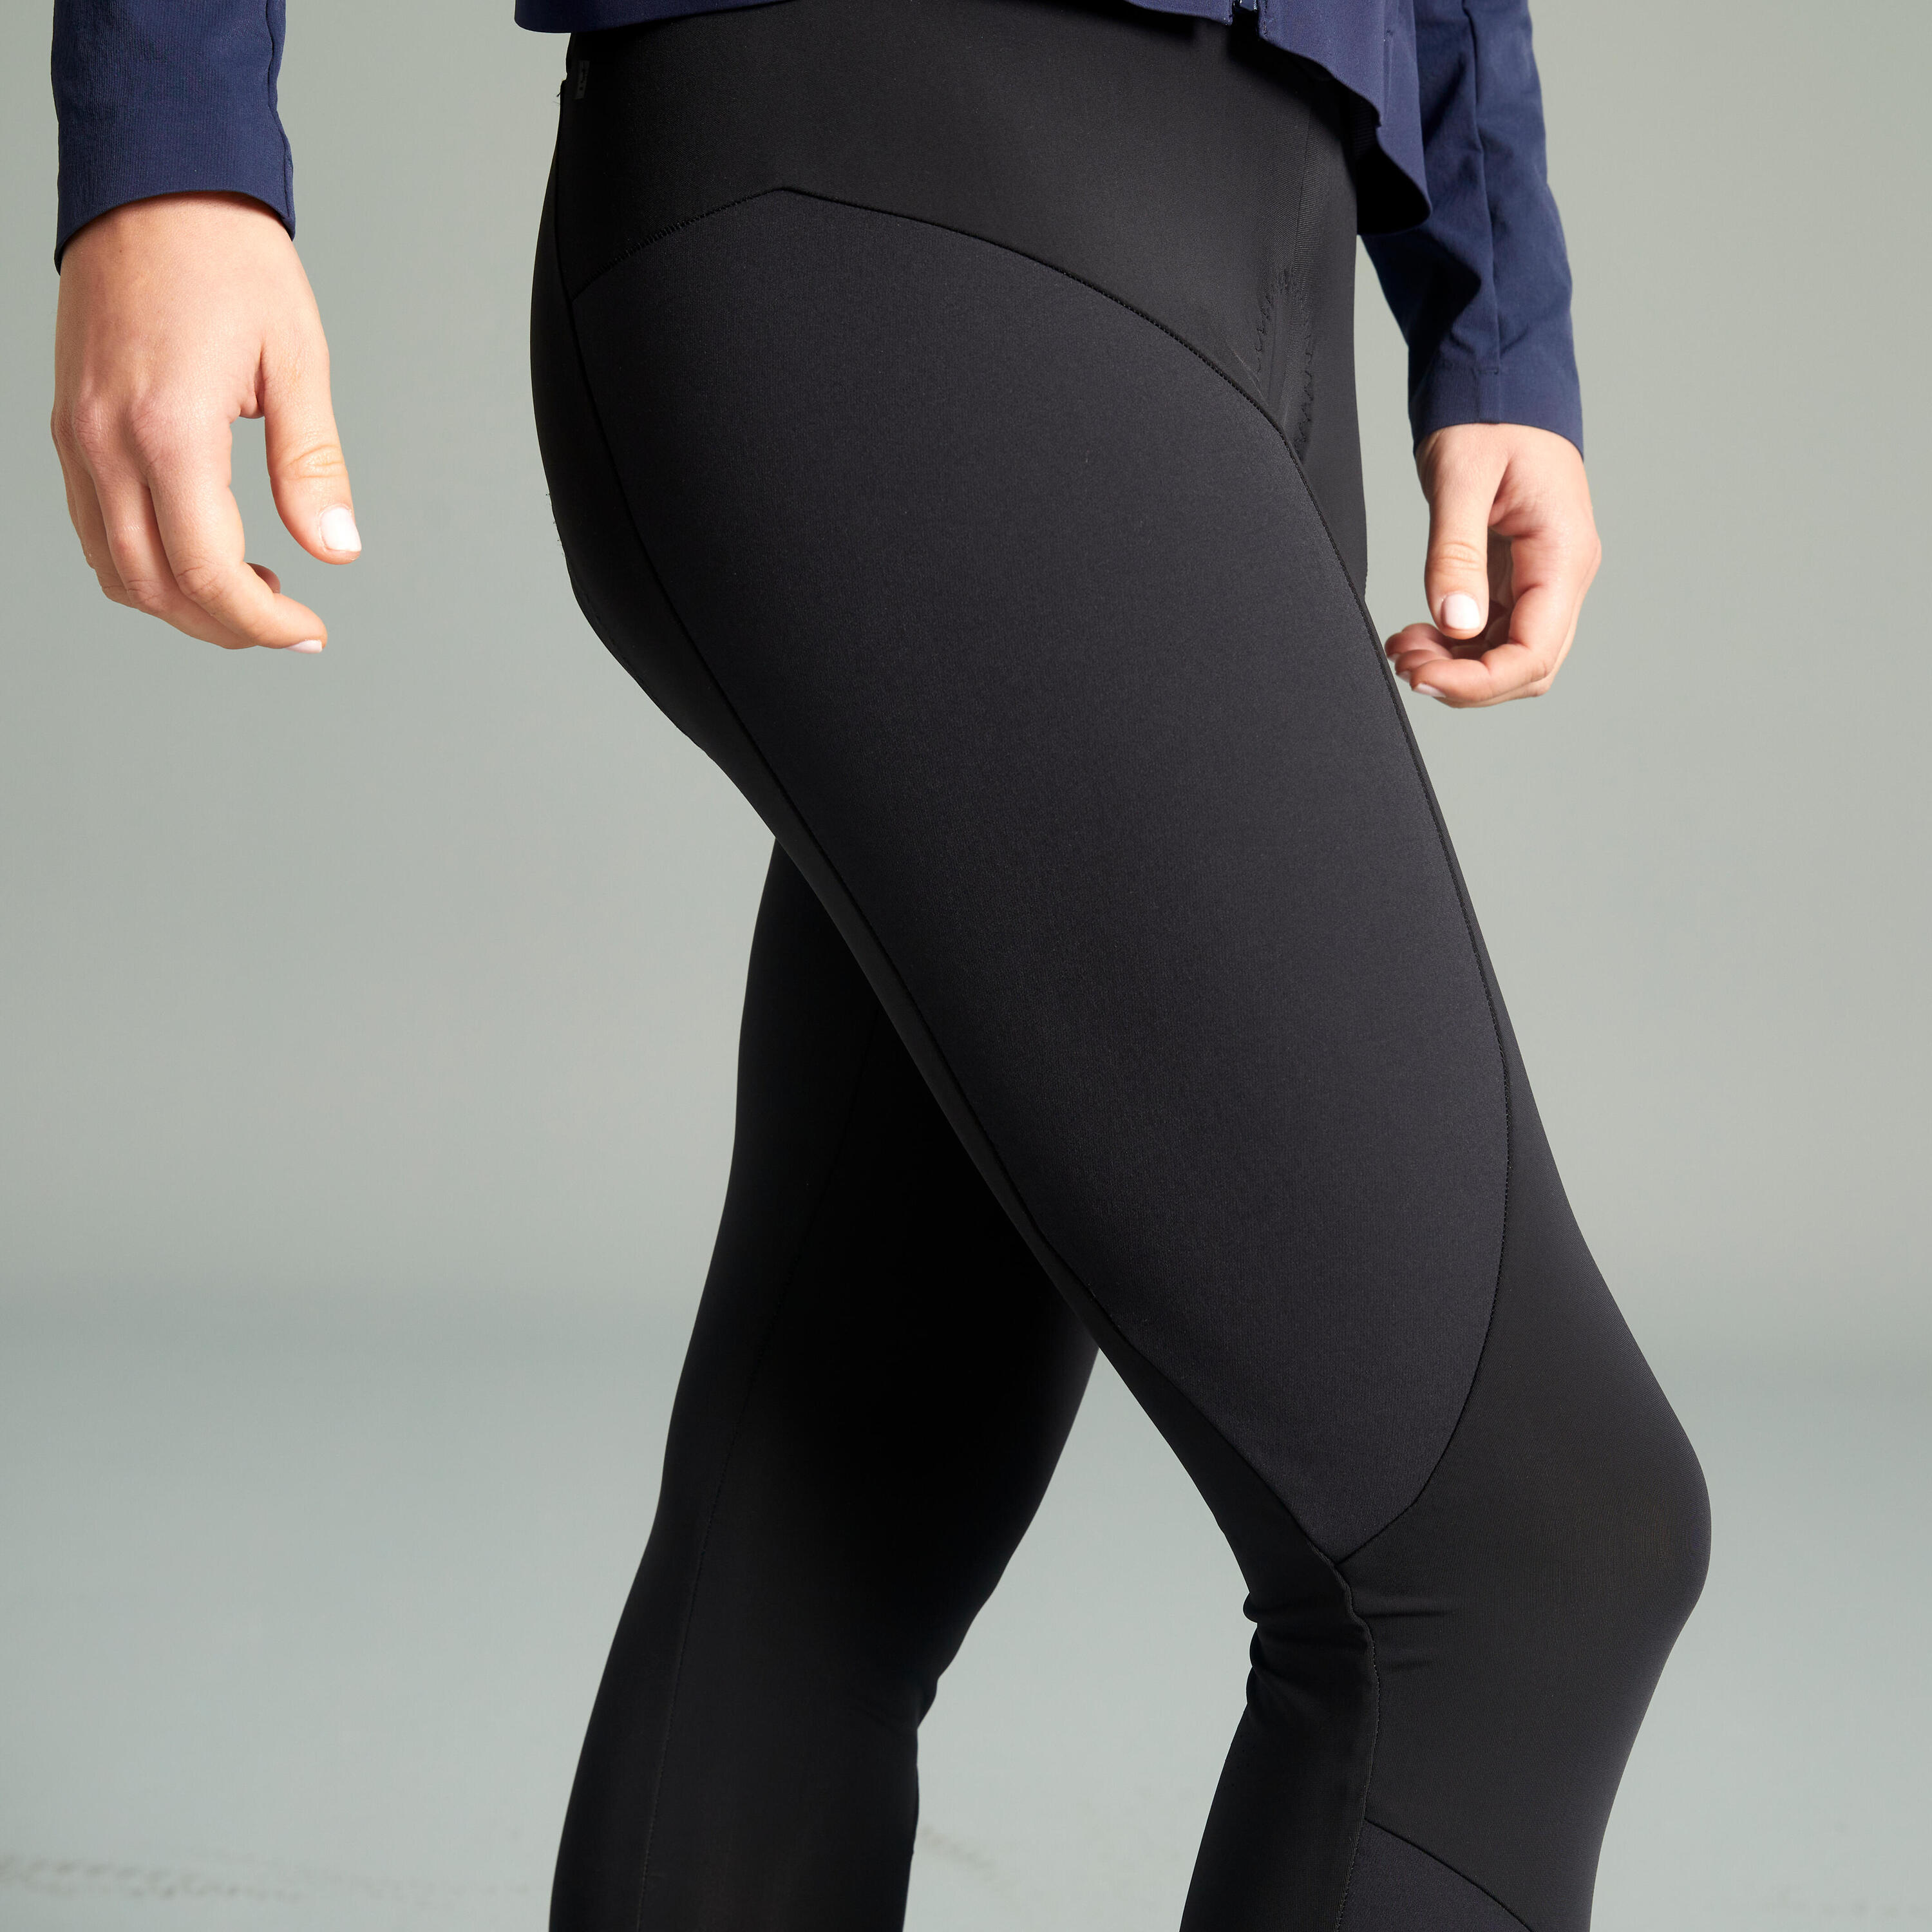 Women's MTB Cropped Tights / Leggings Explore 500 - Black 7/9